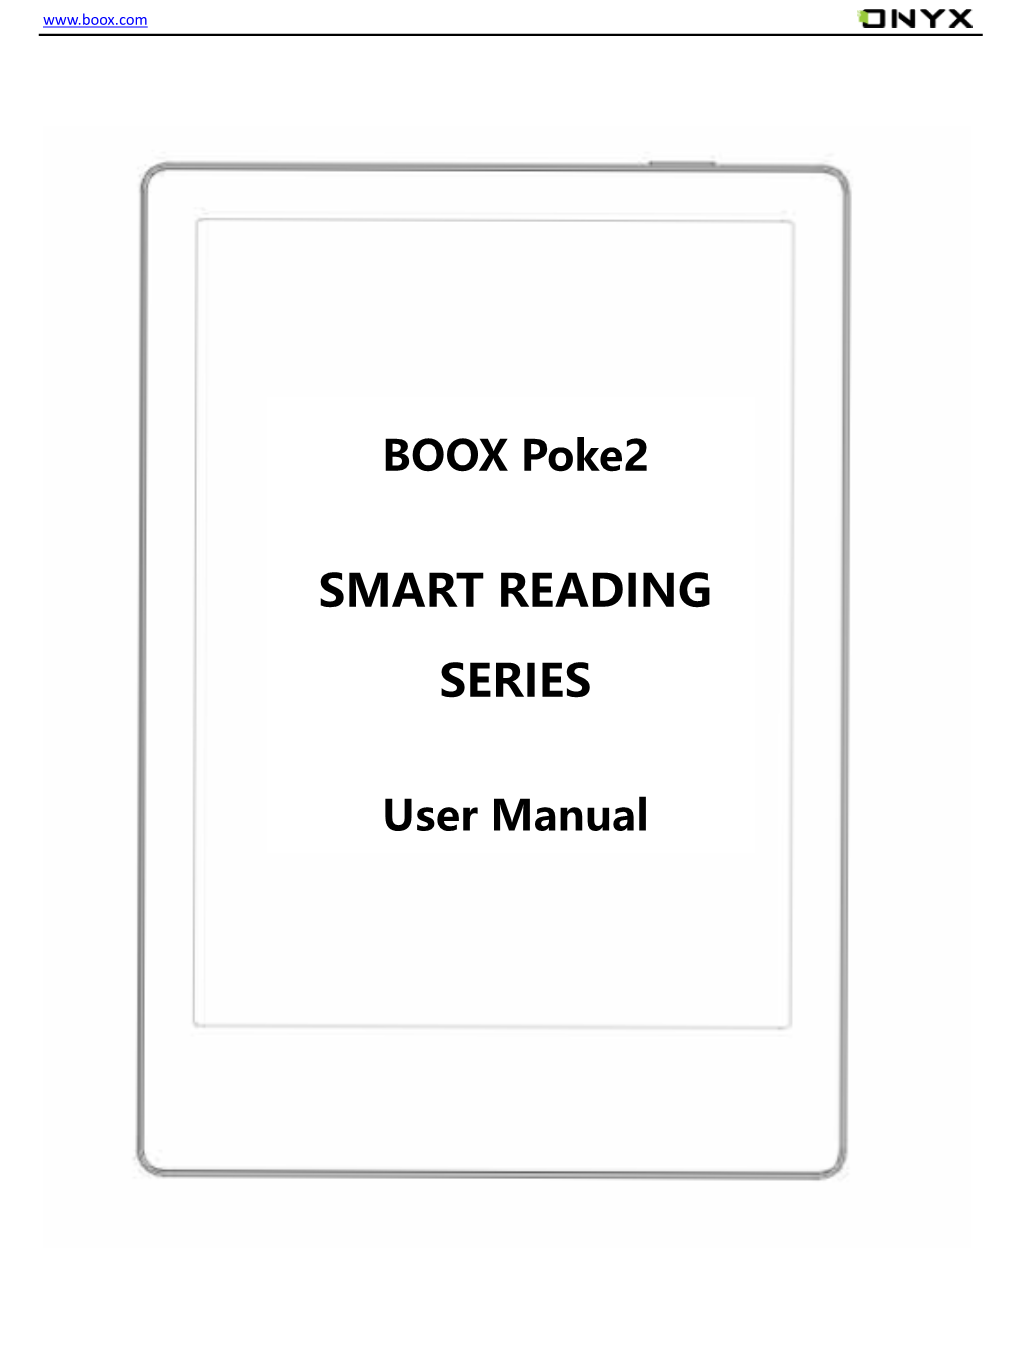 Onyx Boox Poke 2 User Manual and Guide